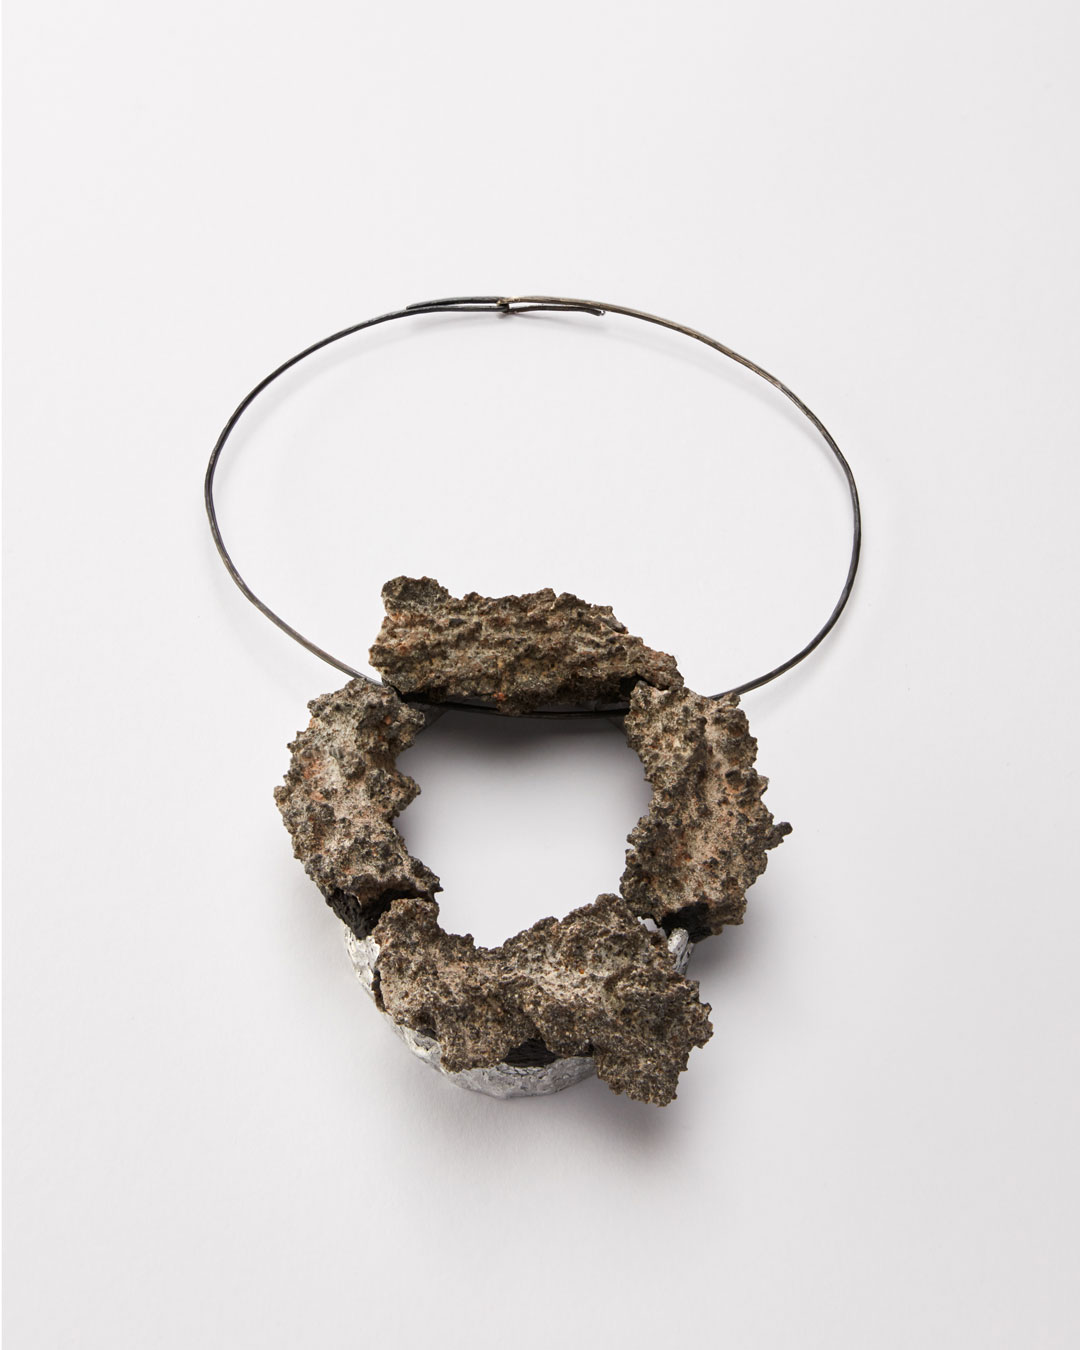 Iris Bodemer, Ordnung 5 (Array 5), 2019, pendant; aluminium, fulgurite, mounting adhesive, 140 x 110  x 35 mm, €3500